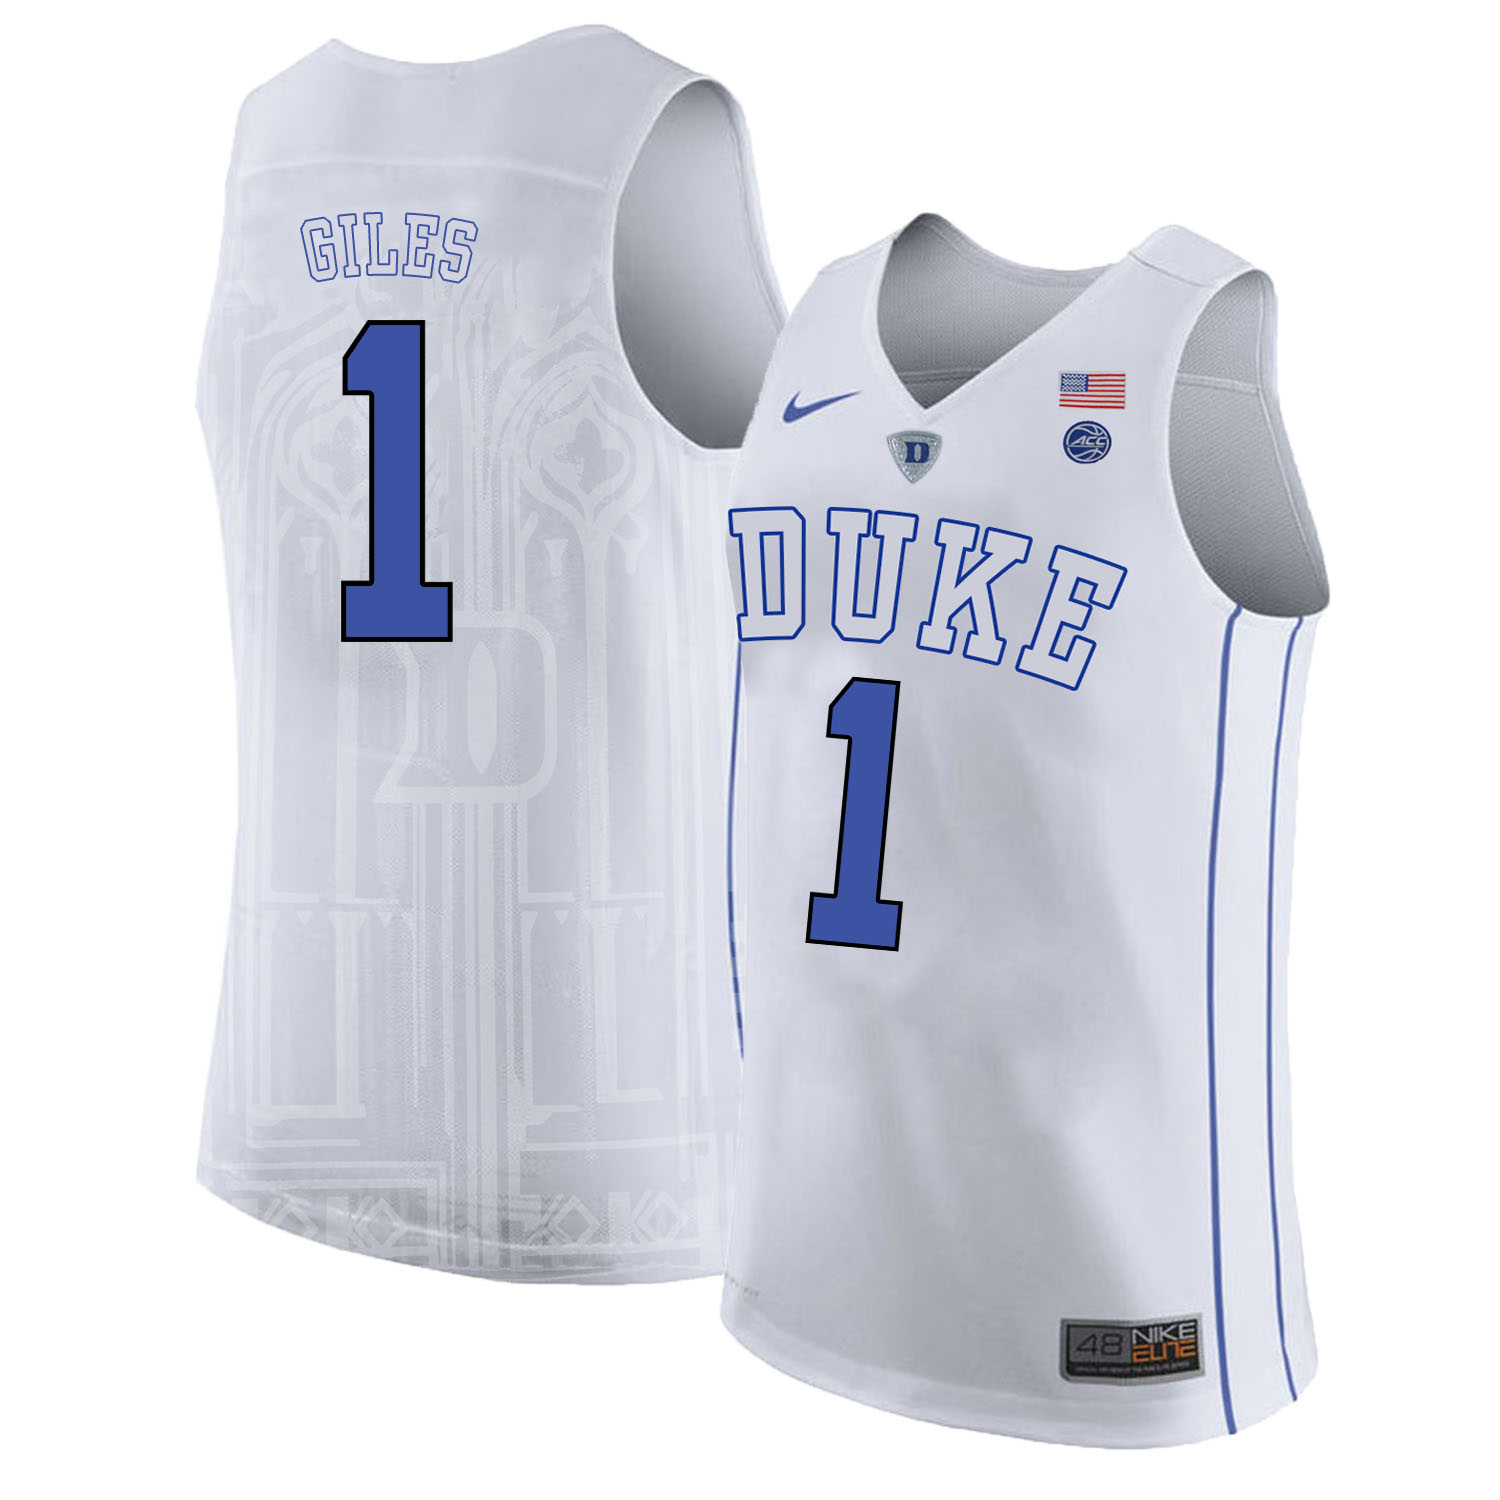 Duke Blue Devils 1 Harry Giles White Nike College Basketball Jersey